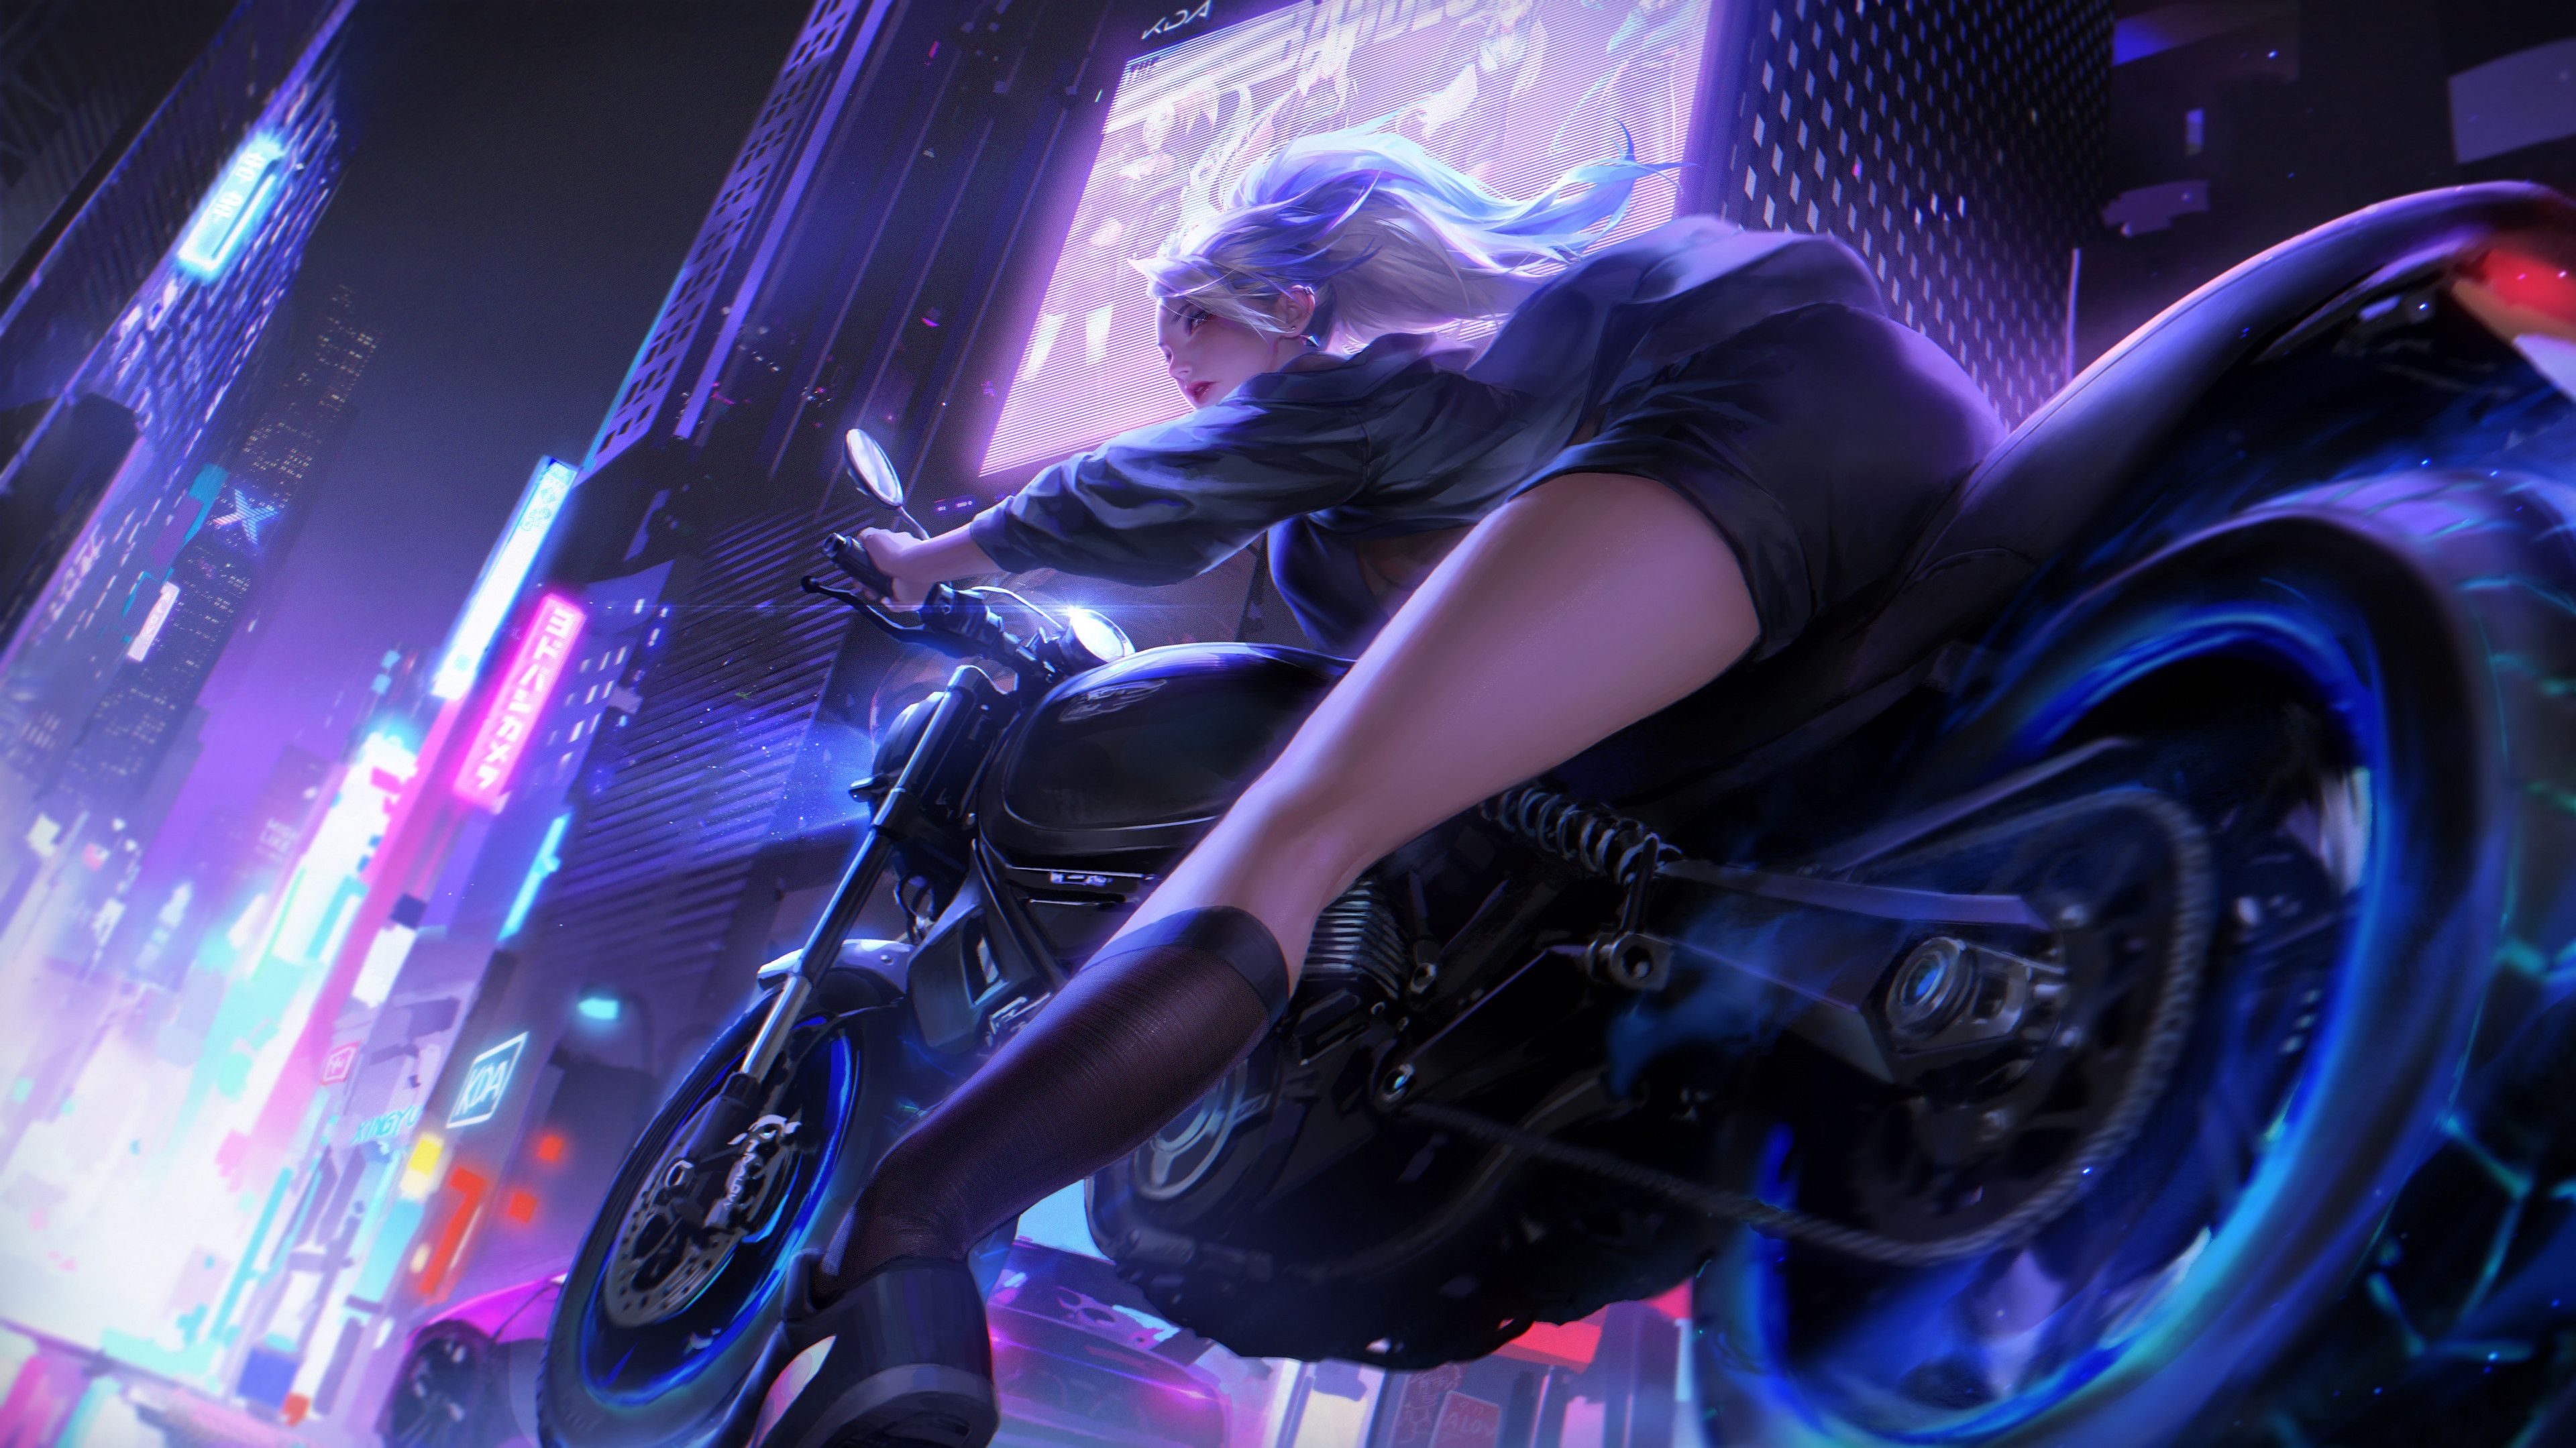 Biker Girl Neon City 4k, HD Artist, 4k Wallpaper, Image, Background, Photo and Picture